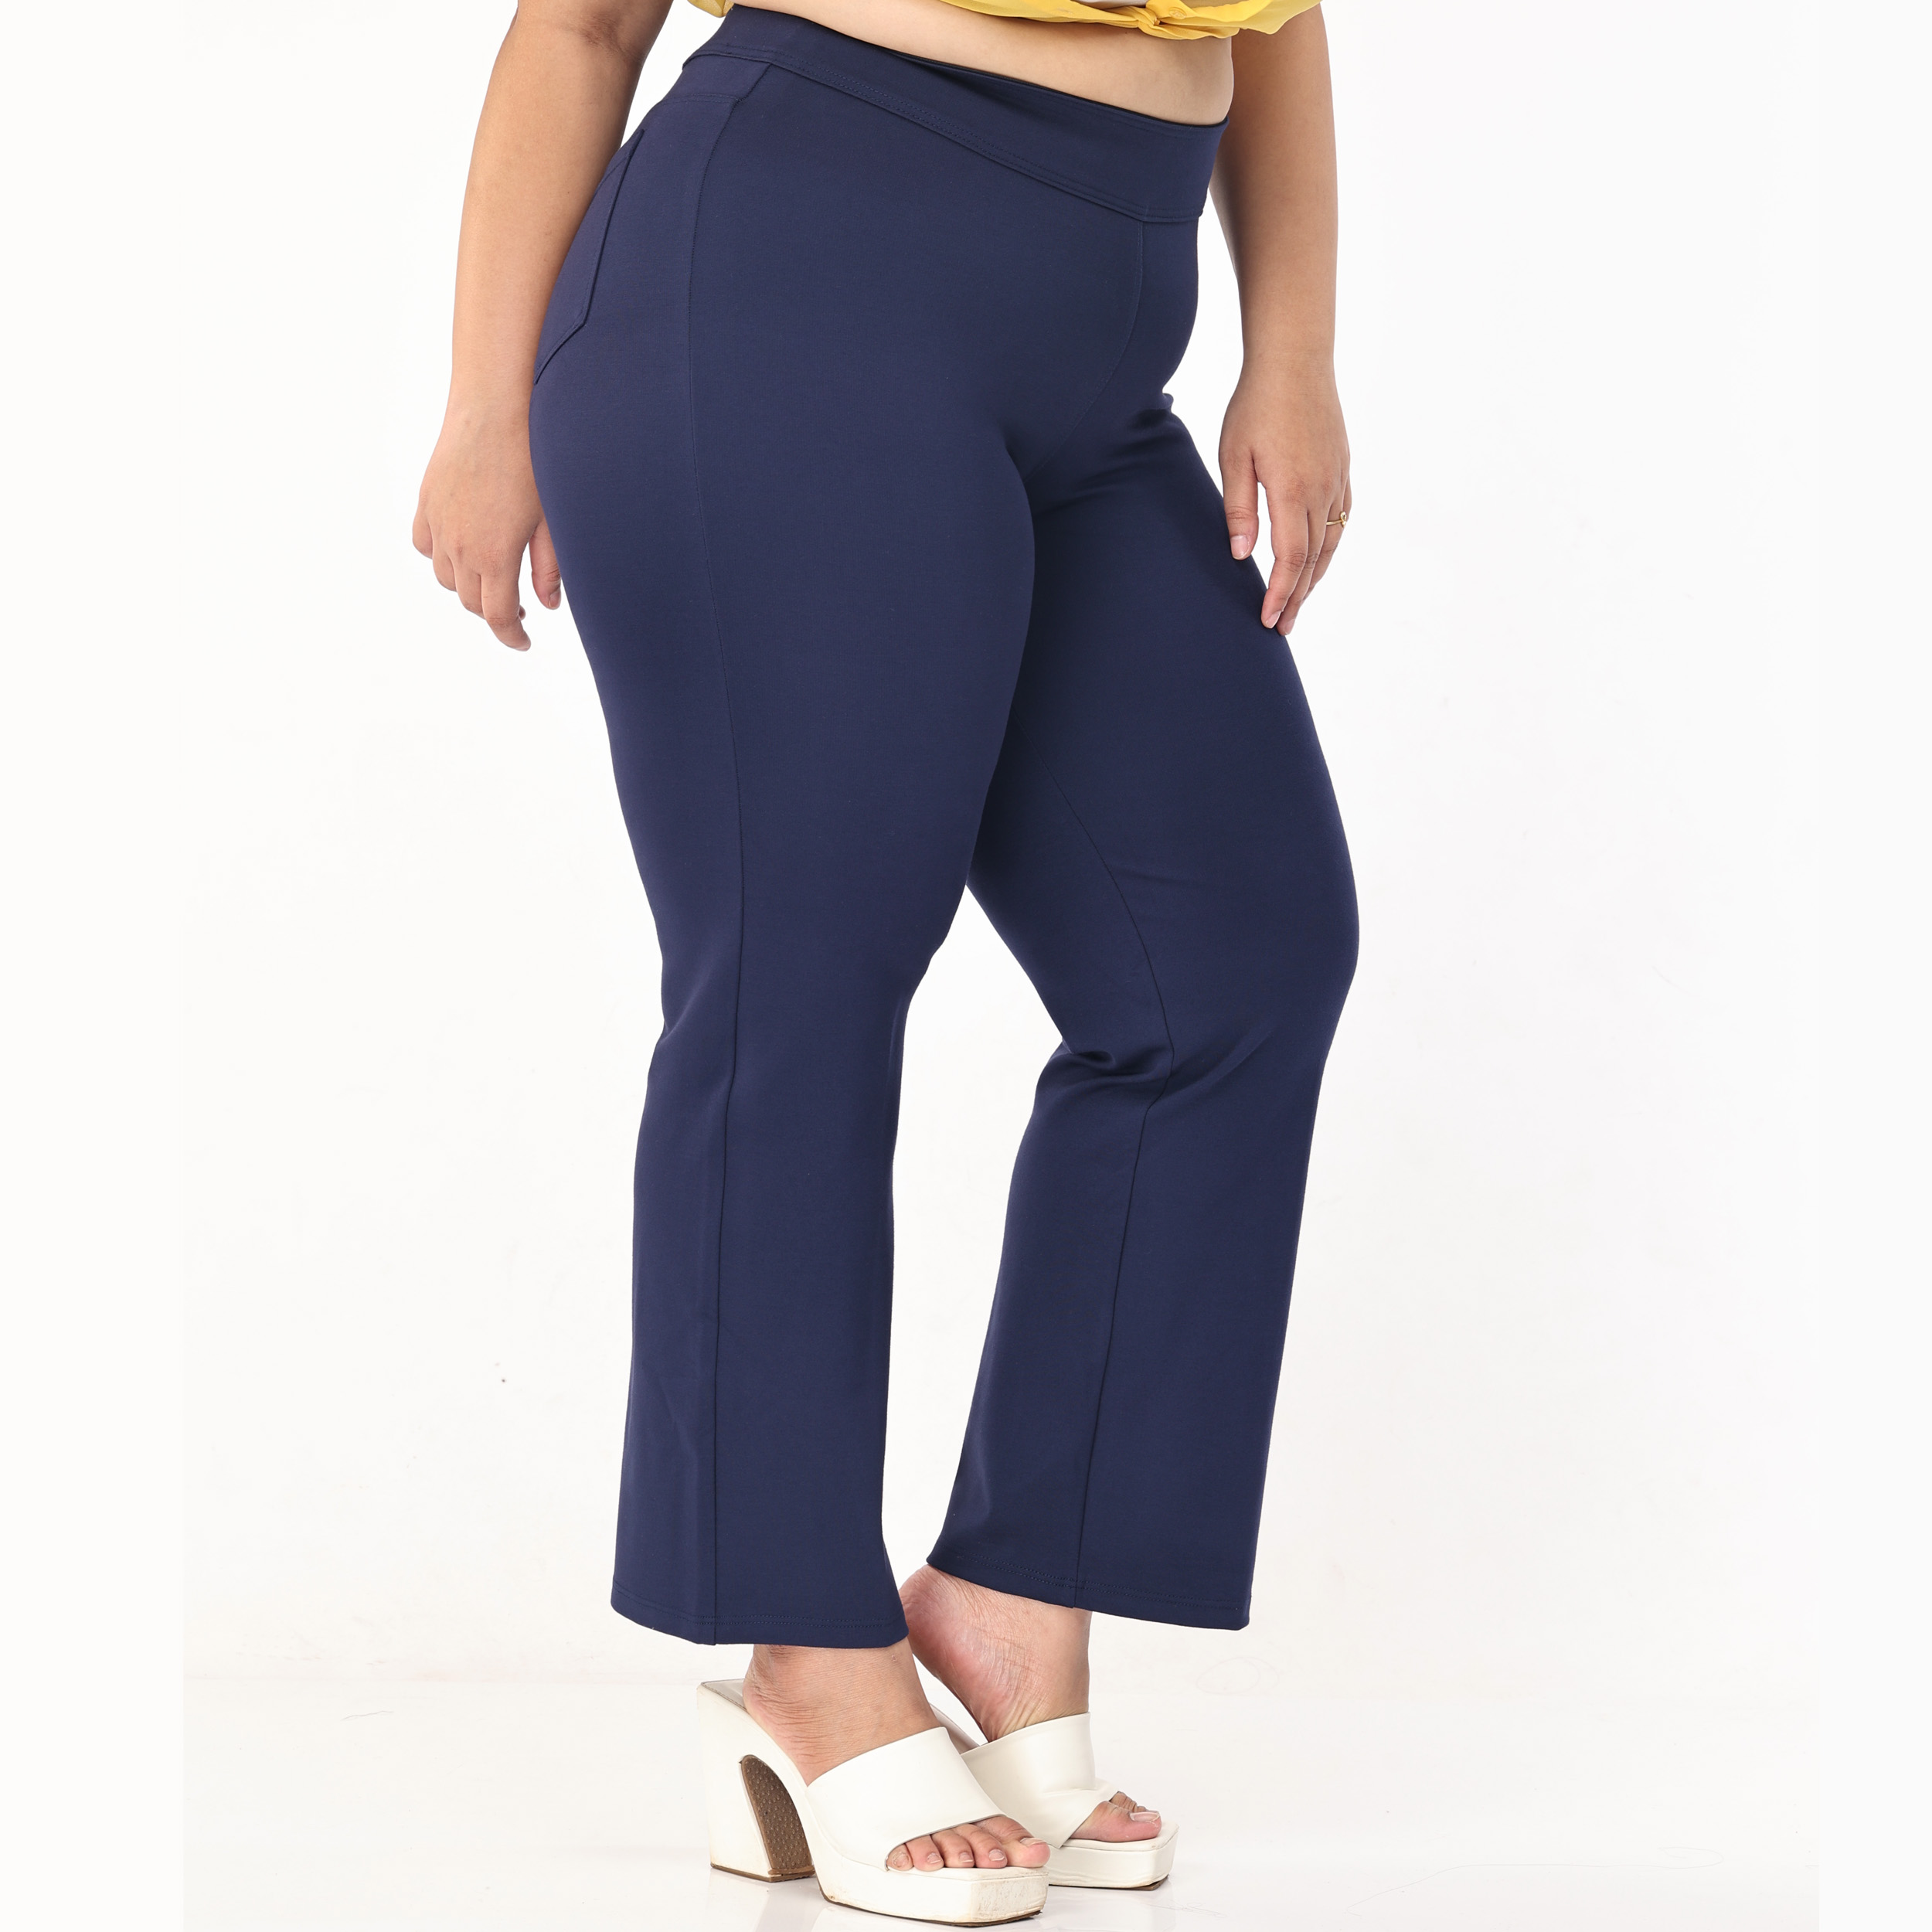 Navy blue trousers women - Plus size - Straight leg 2 back pockets